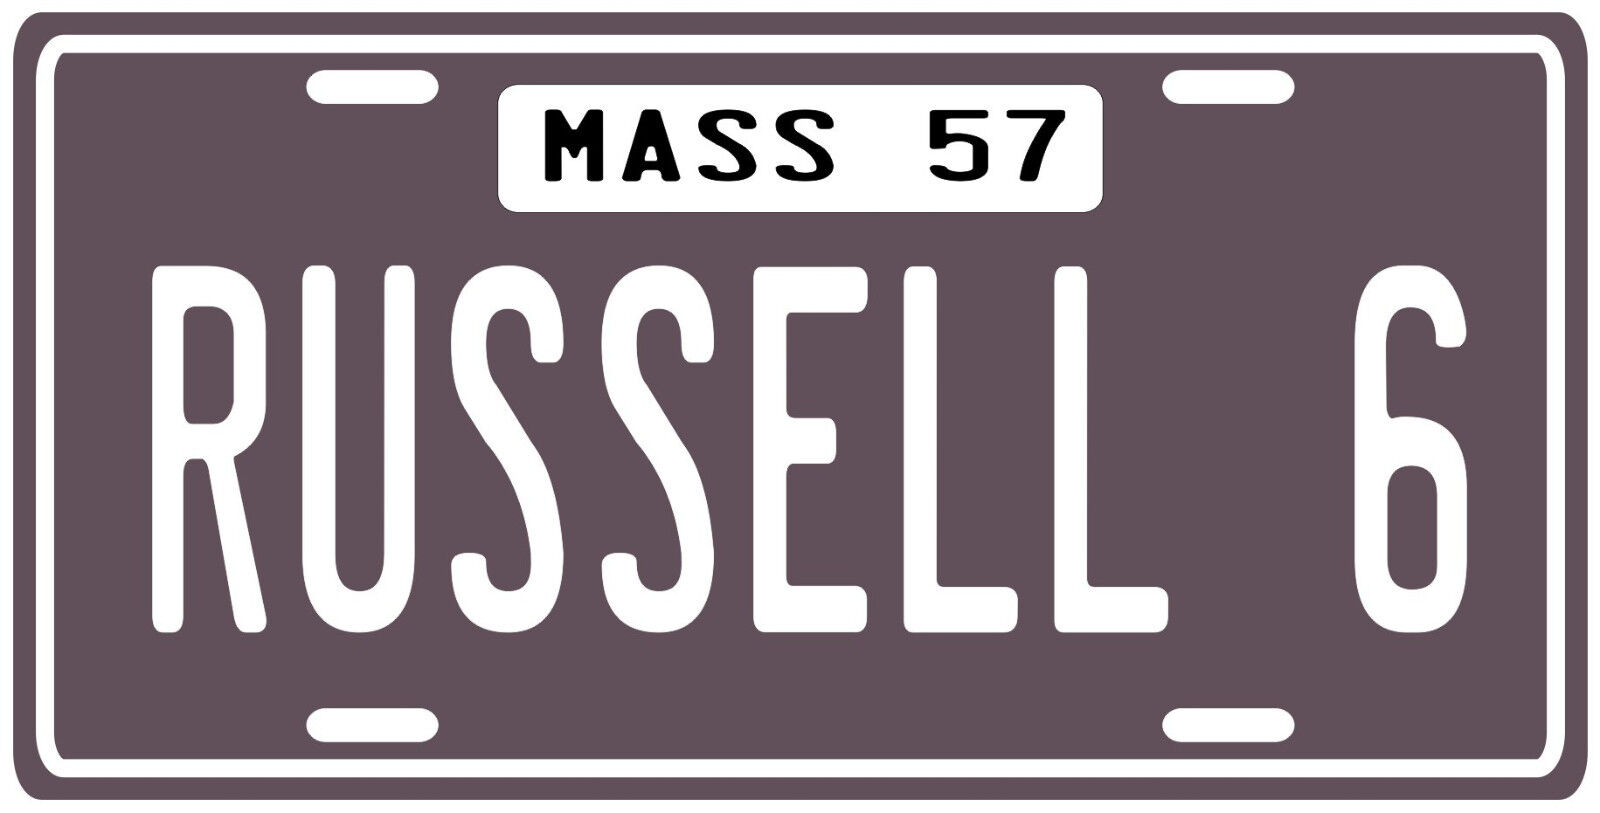 Bill Russell Boston Celtics Rookie 1957 License plate 